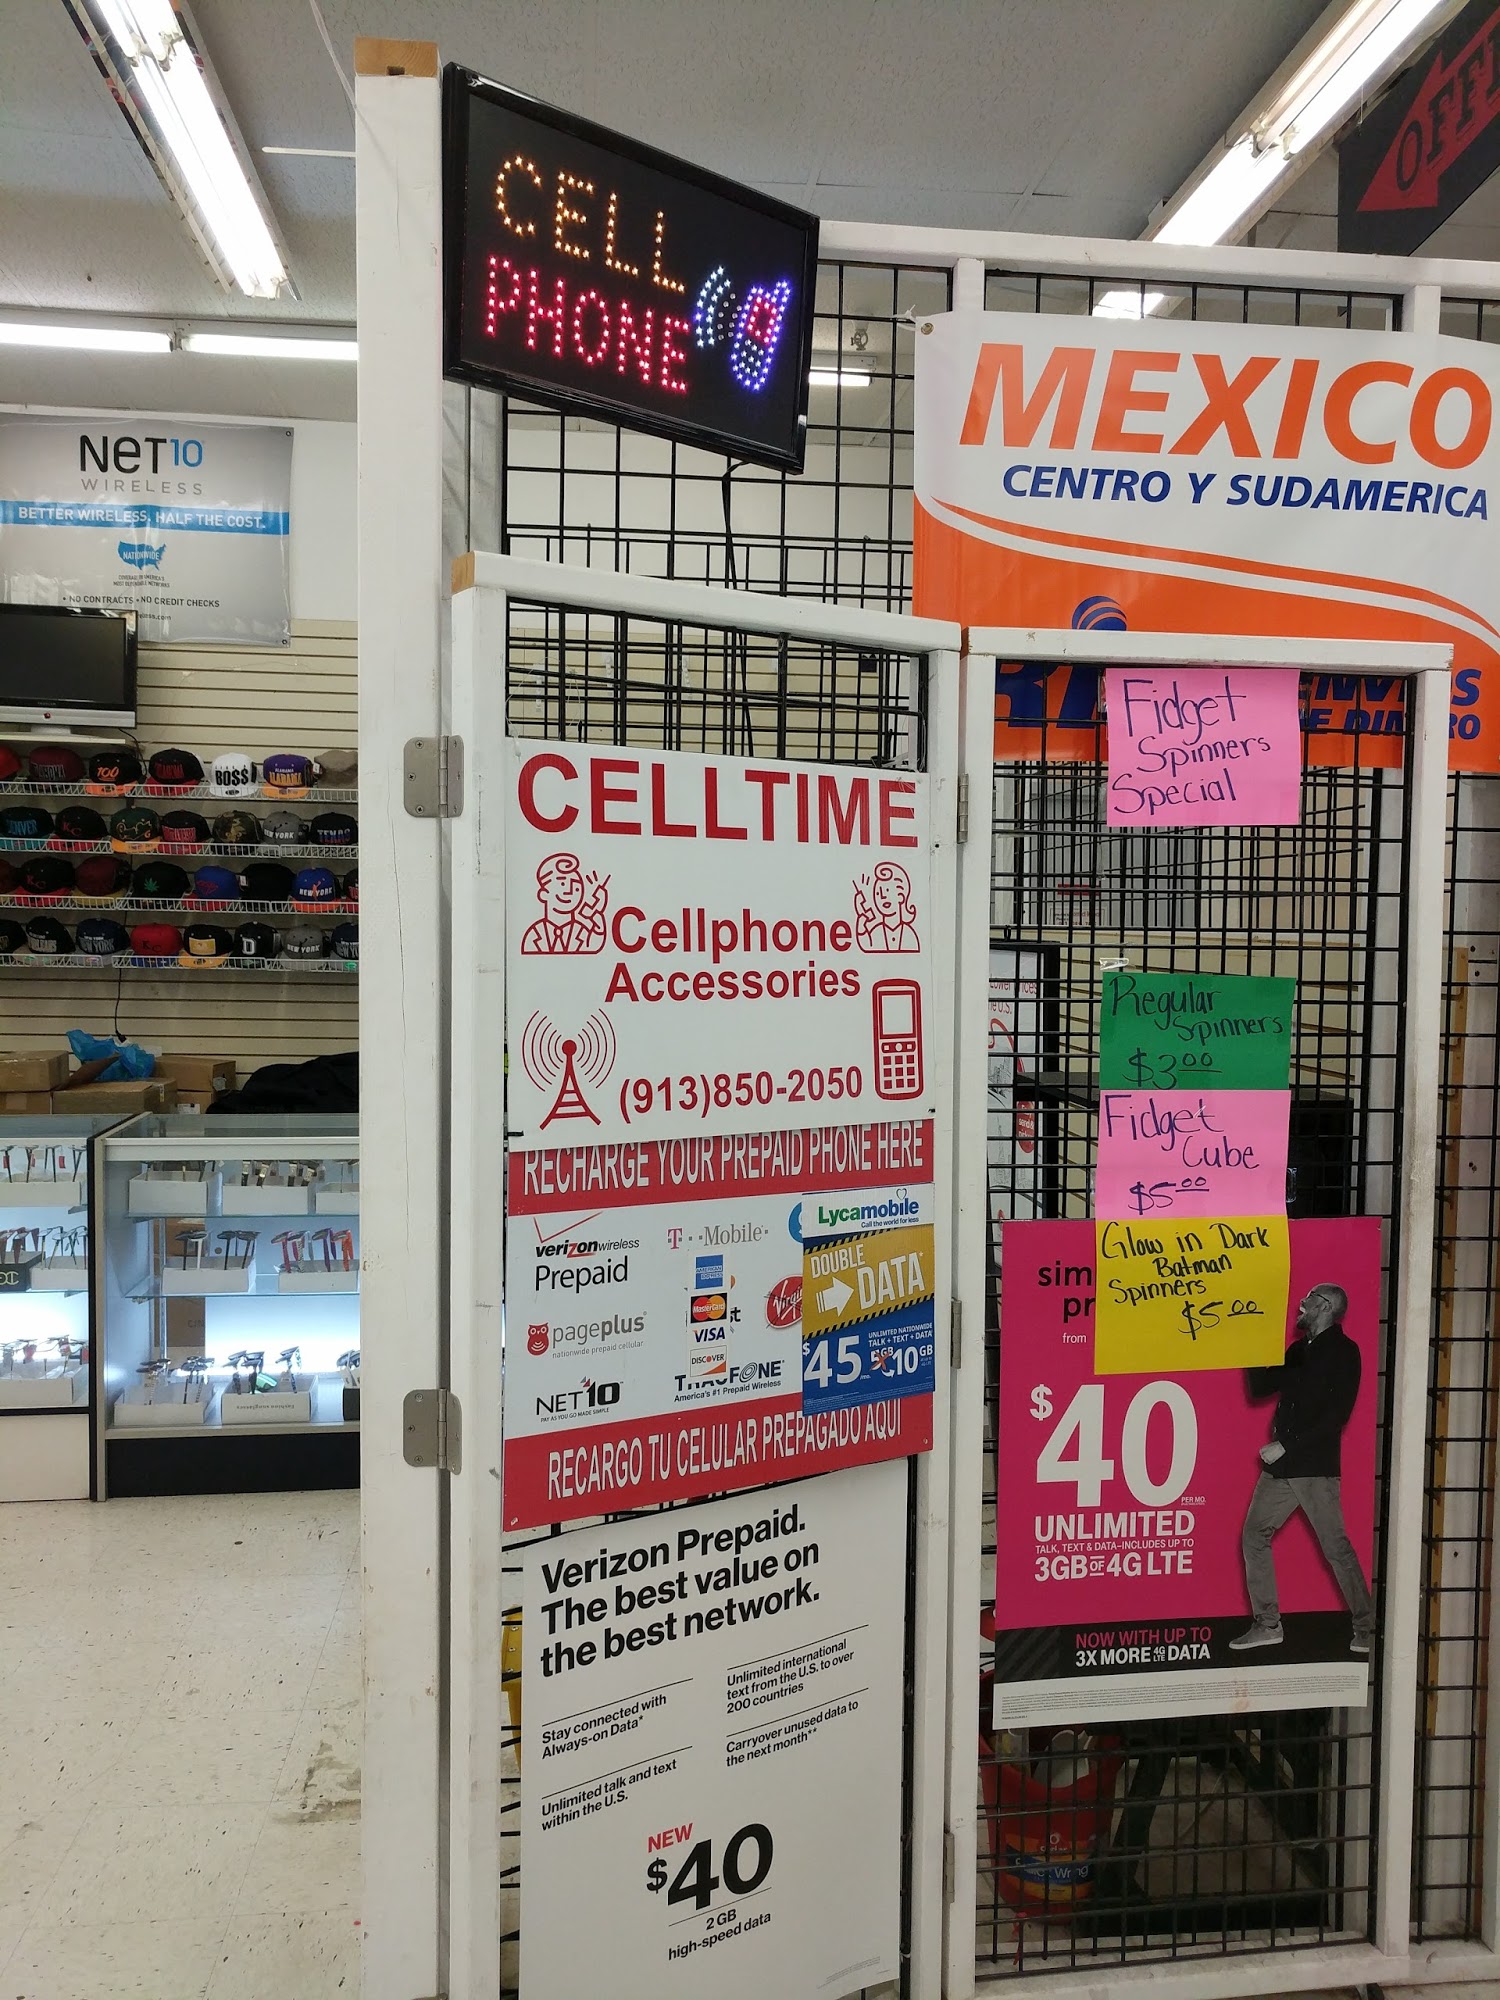 Celltime cellphone Accessories.